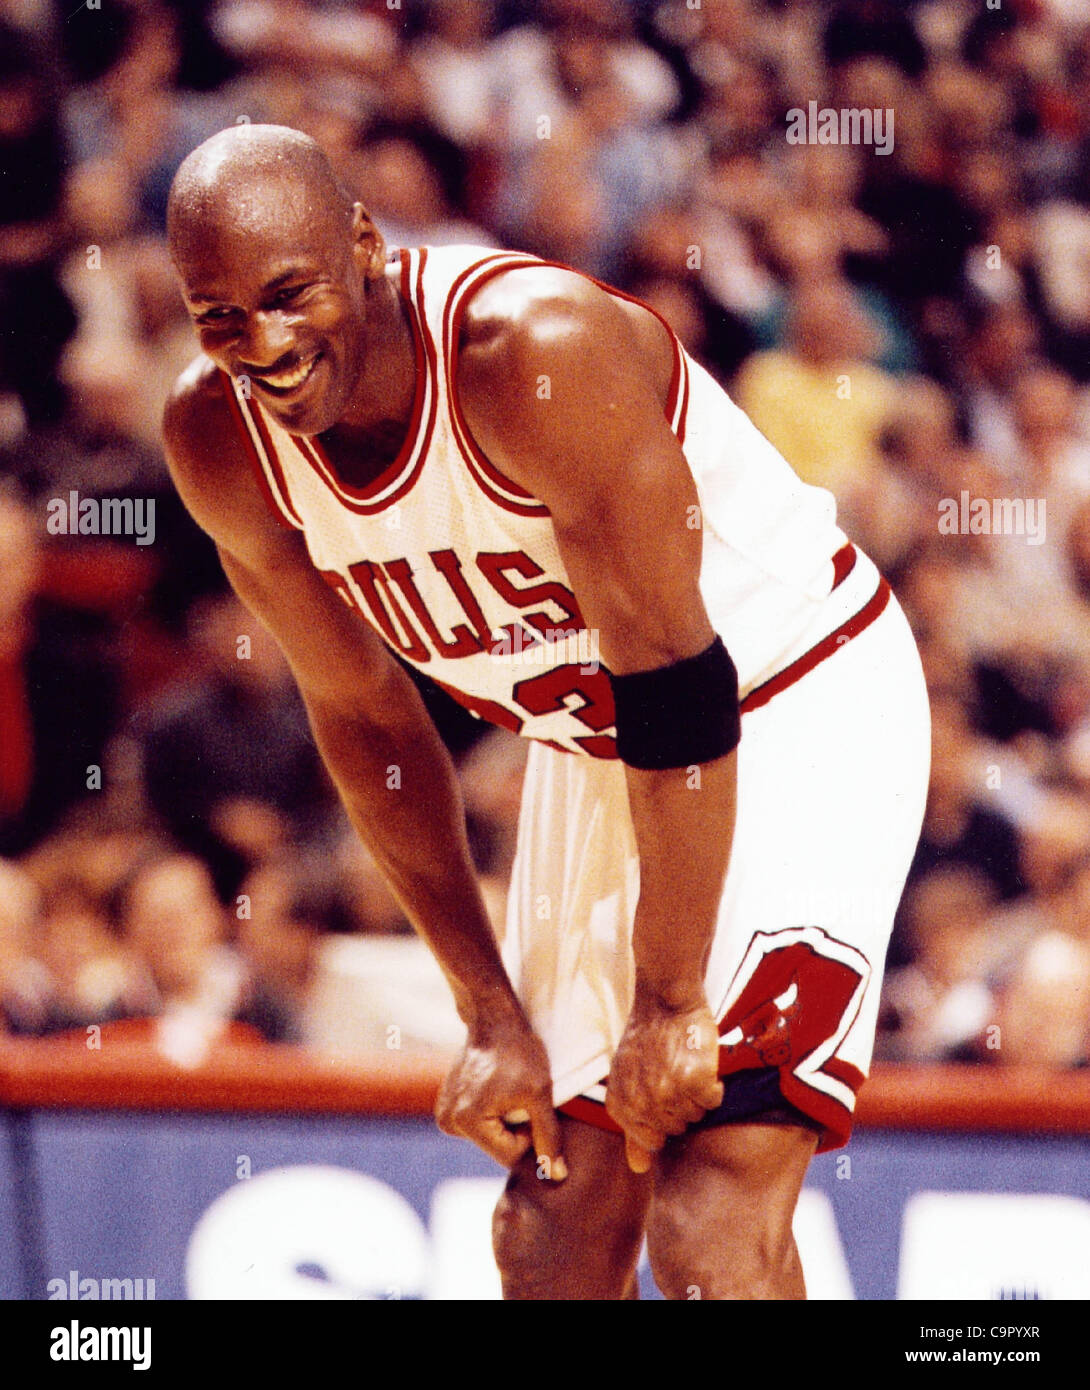 MICHAEL JORDAN.06-07-1998 Chicago (Illinois): The Basketball player Michael Jordan.(Credit Image: Â© Gianni Congiu/Globe Photos/ZUMAPRESS.com) Stock Photo